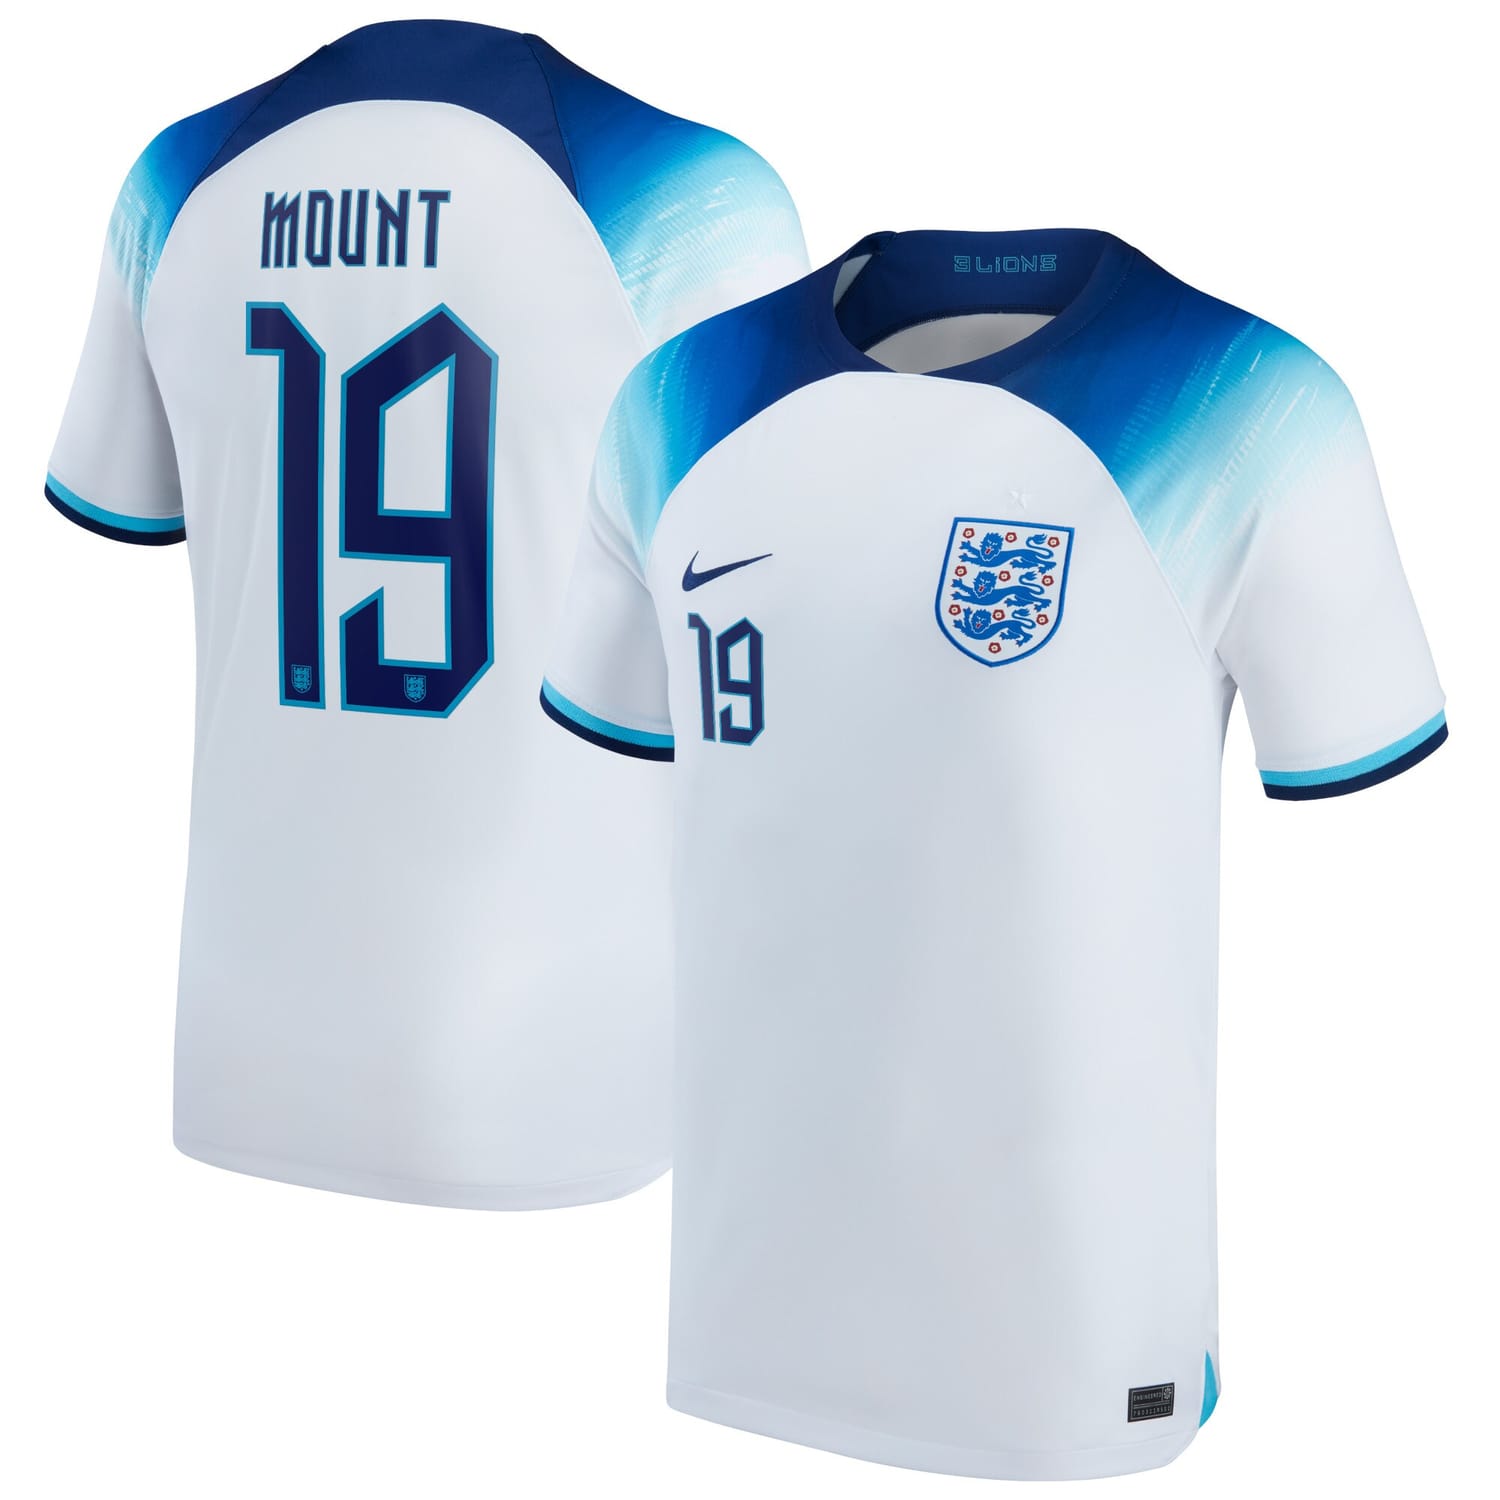 England National Team Home Jersey Shirt 2022 player Mason Mount 19 printing for Men